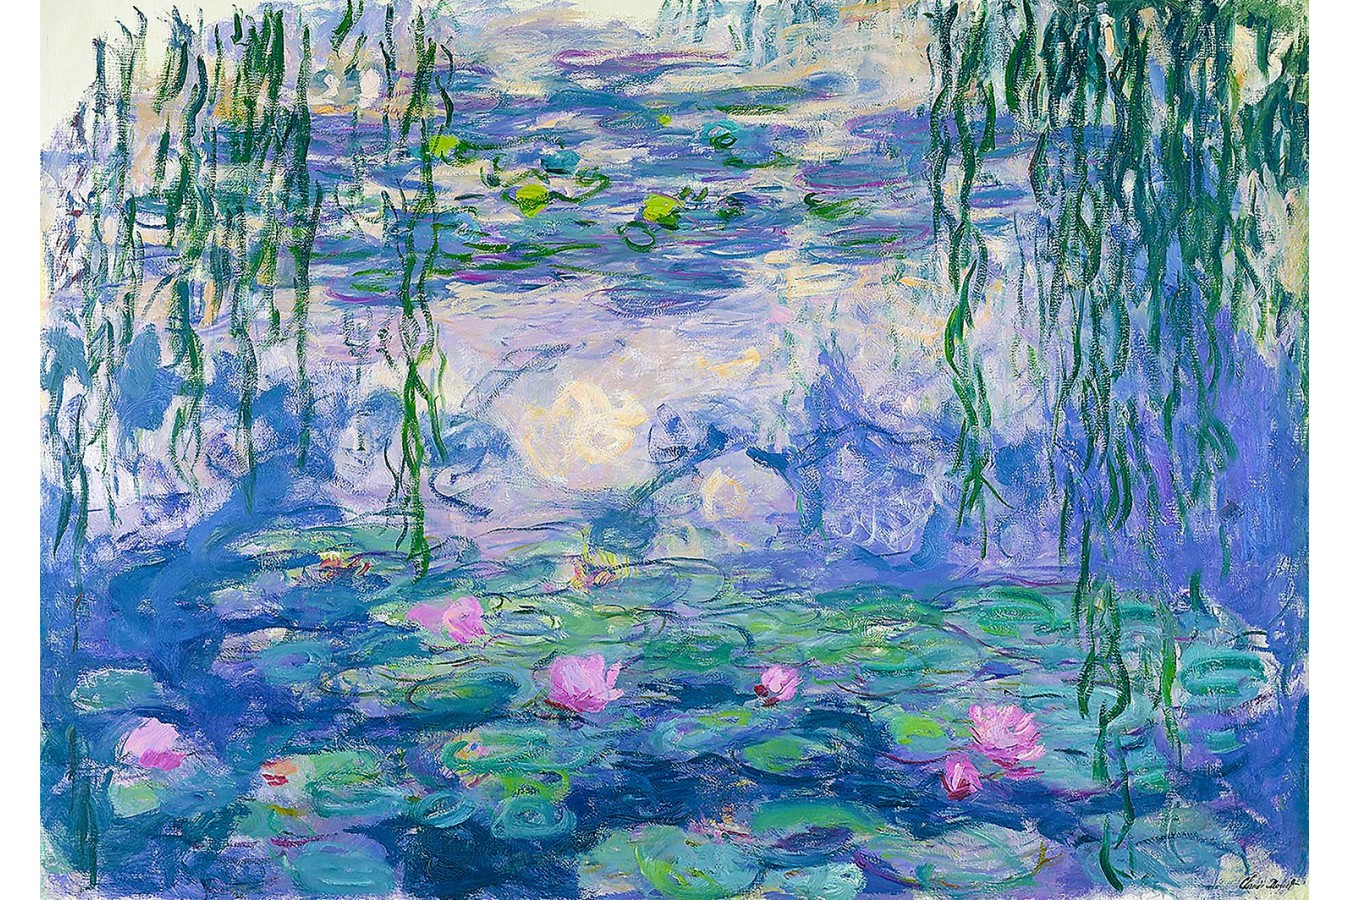 Puzzle 1000 piese - Claude Monet: Nympheas (Water Lilies) (Enjoy-1197)